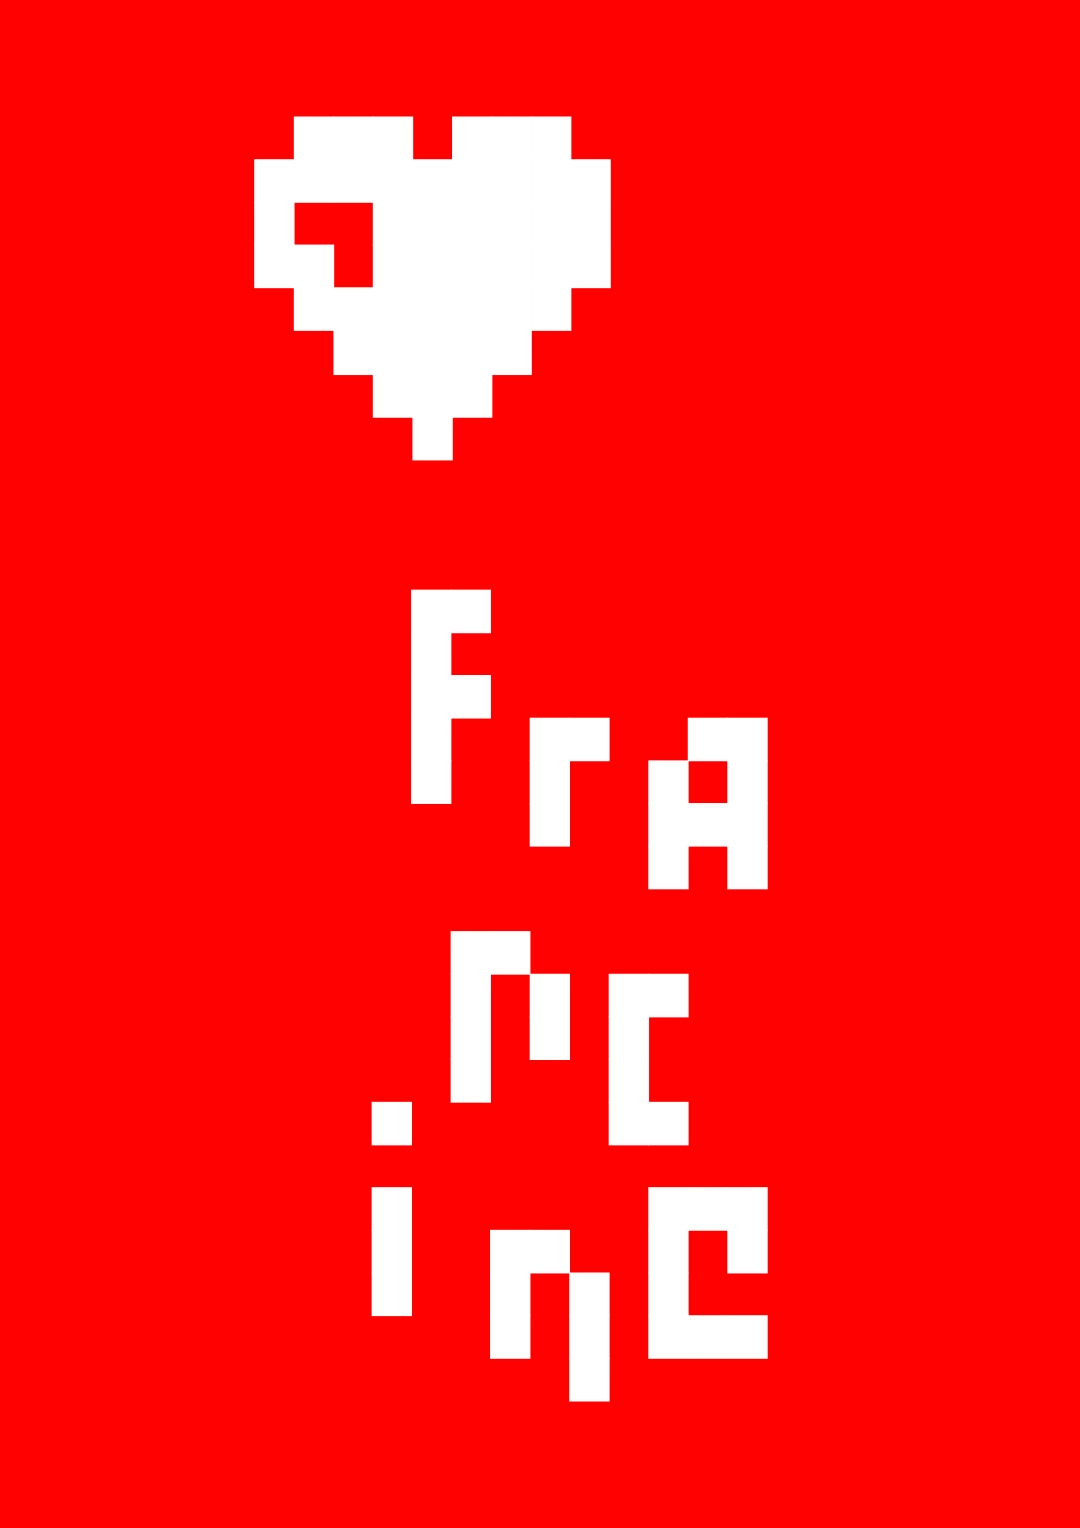 Picto coeur au dessus du log francine vasse en pixel